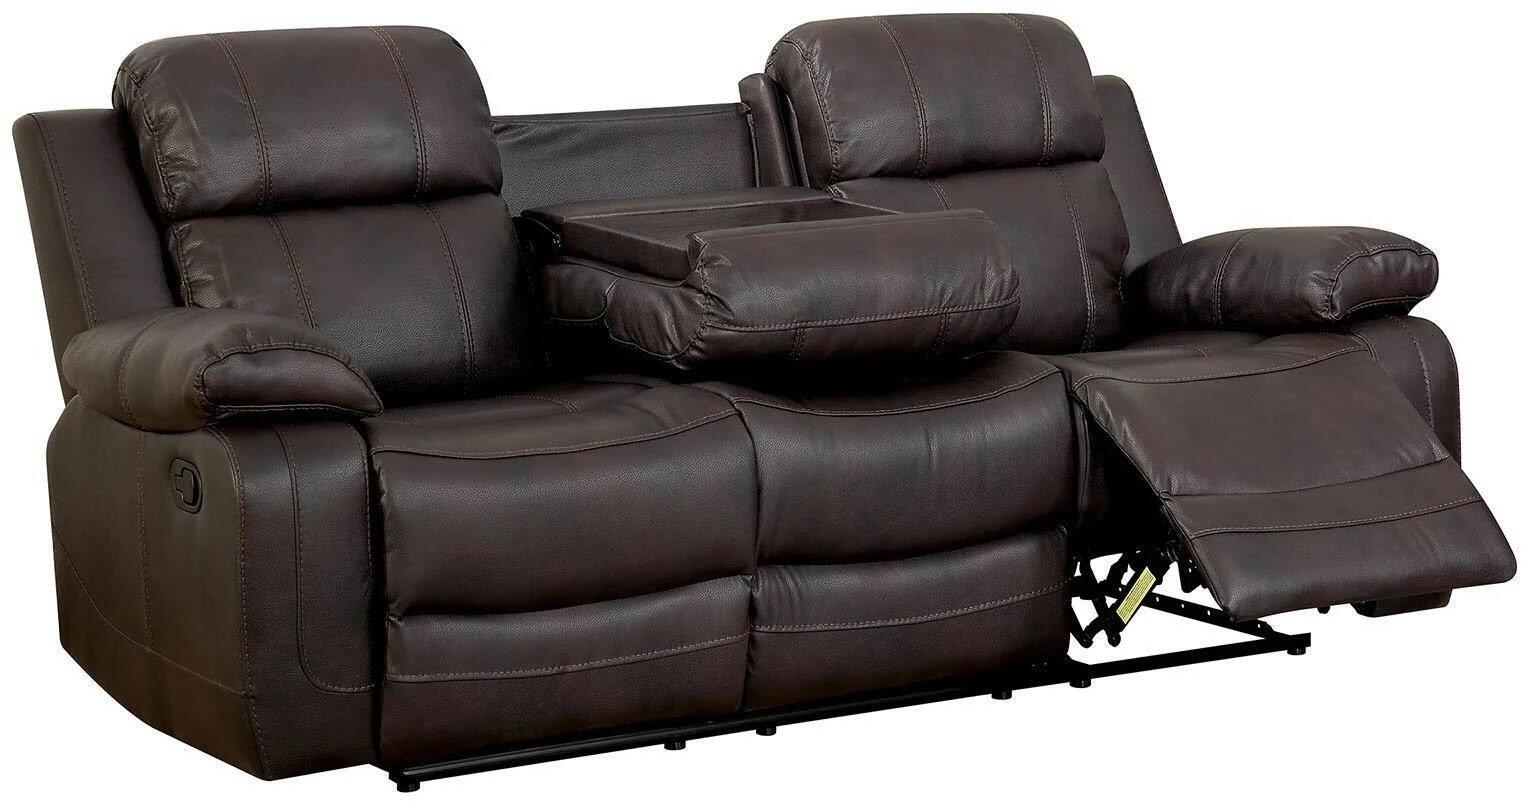 Furniture of America PONDERA CM6568-SF Recliner Sofa